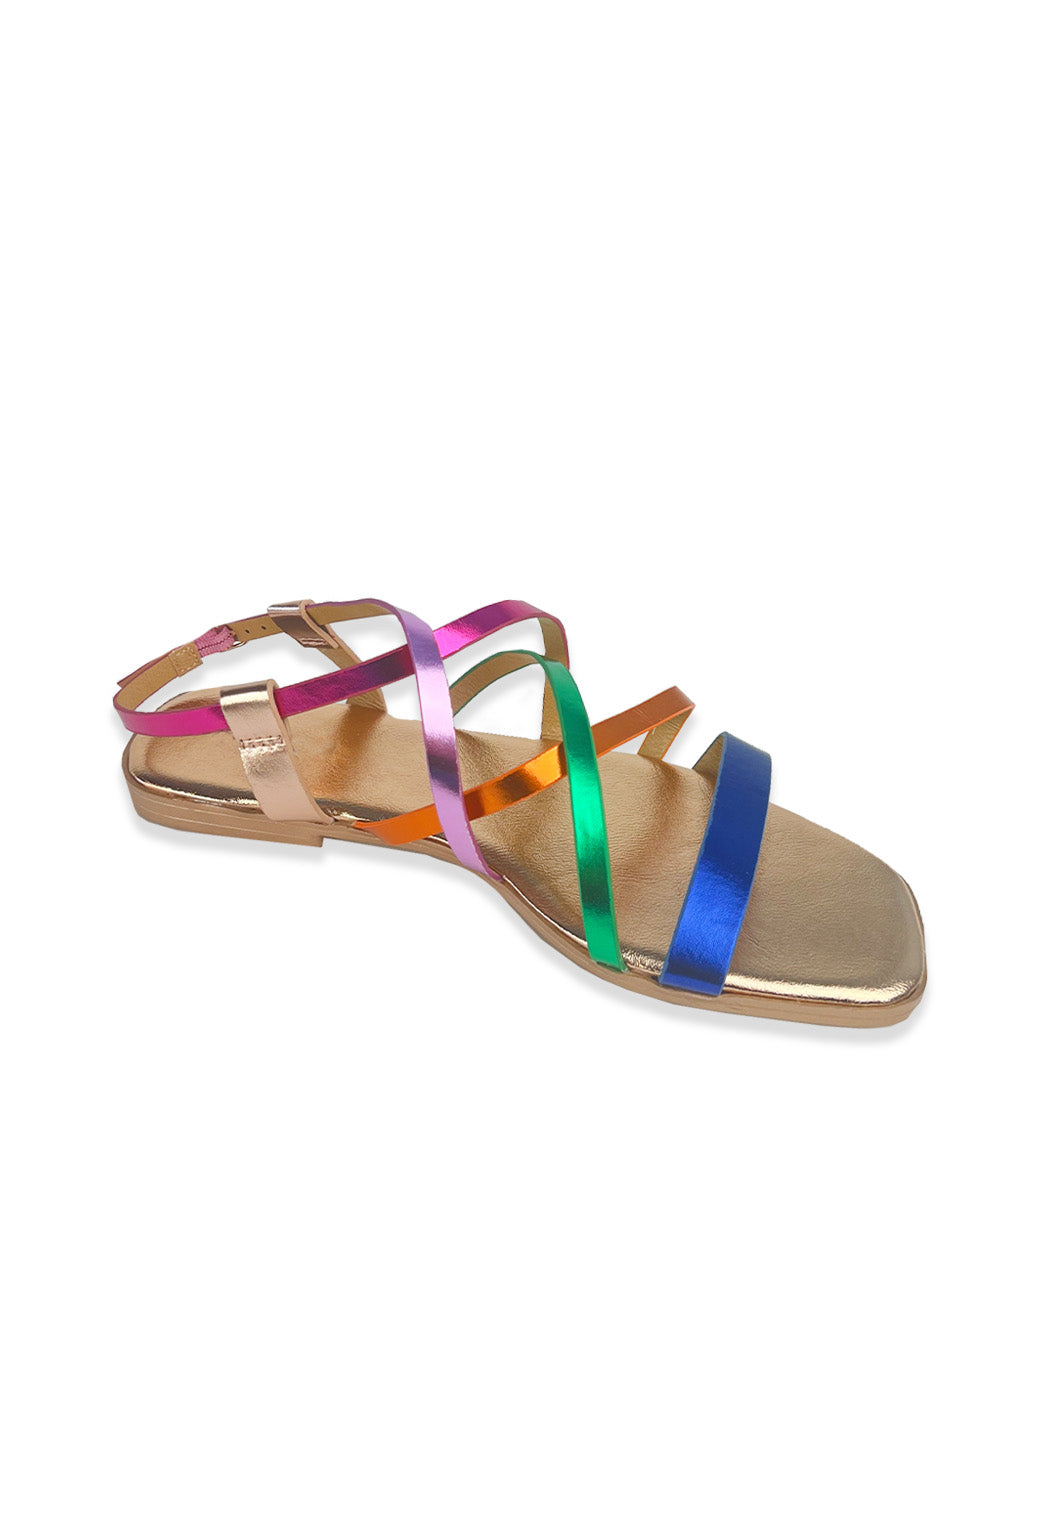 Slippers Flip-Flops Rainbow Sandals High Heels Colorful Casual Beach Women  